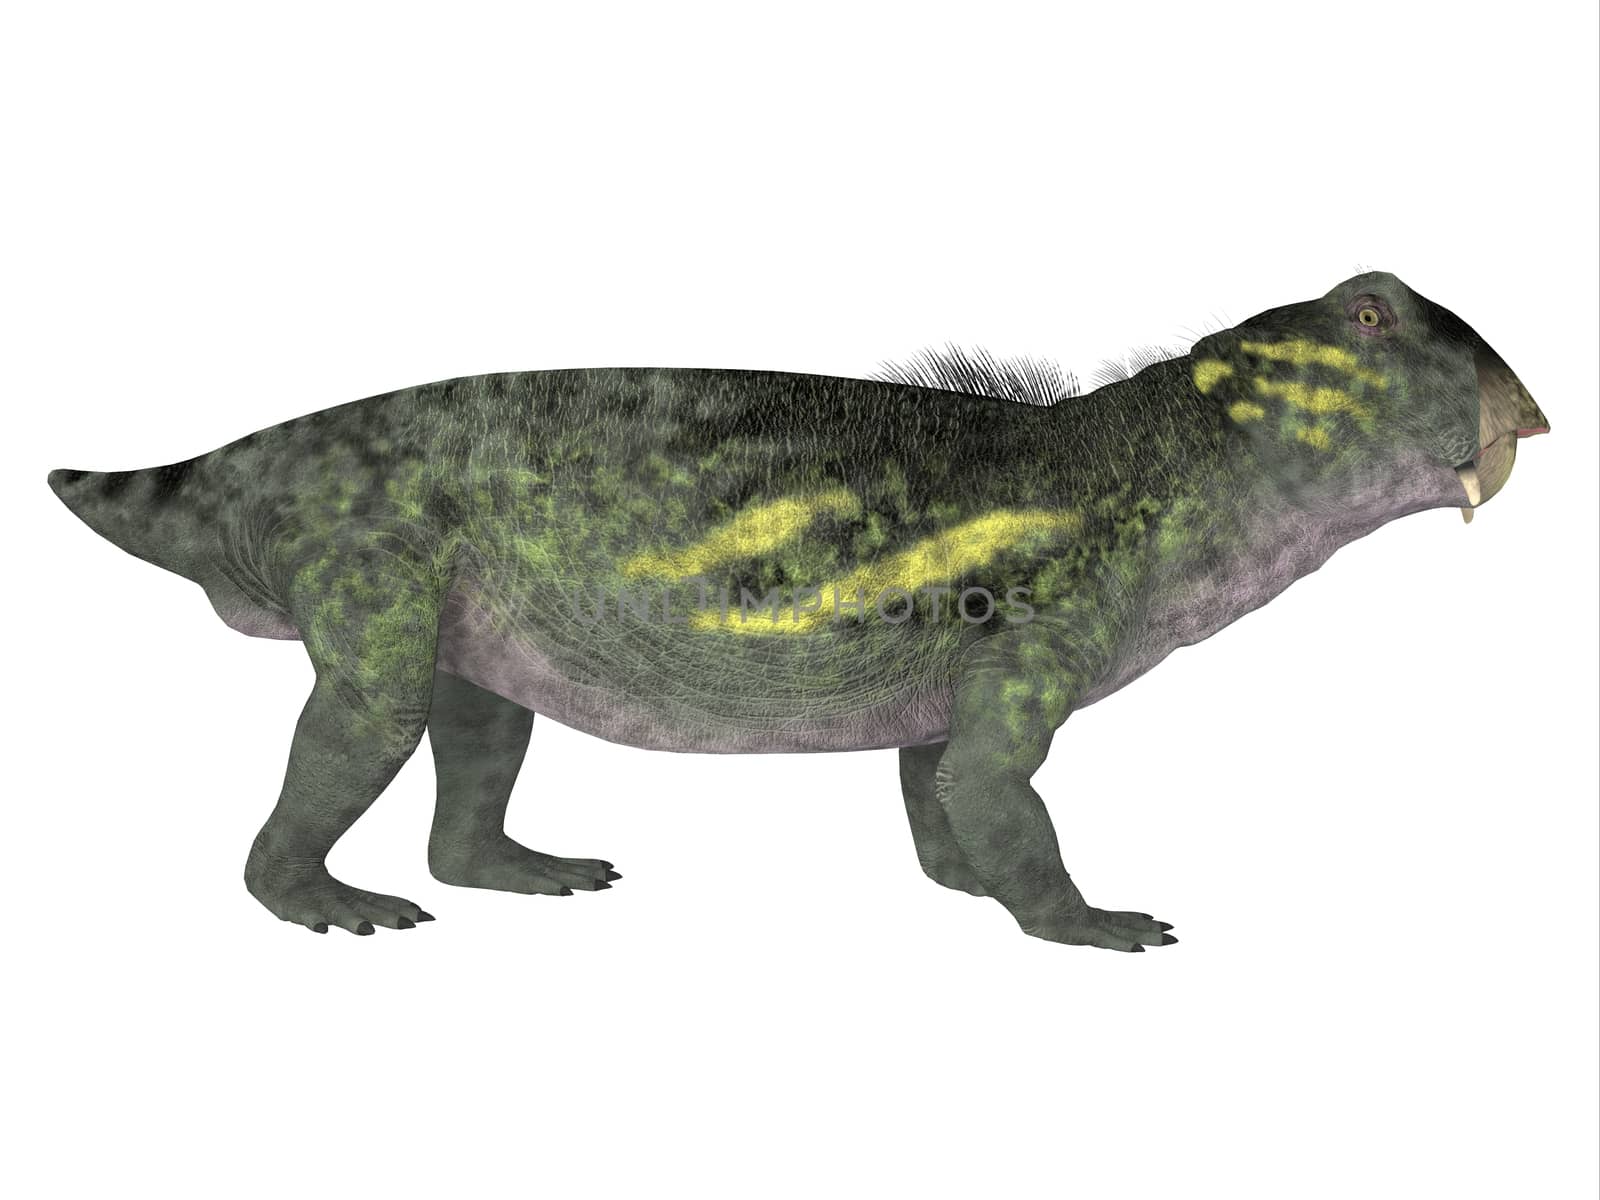 Lytrosaurus Side Profile by Catmando